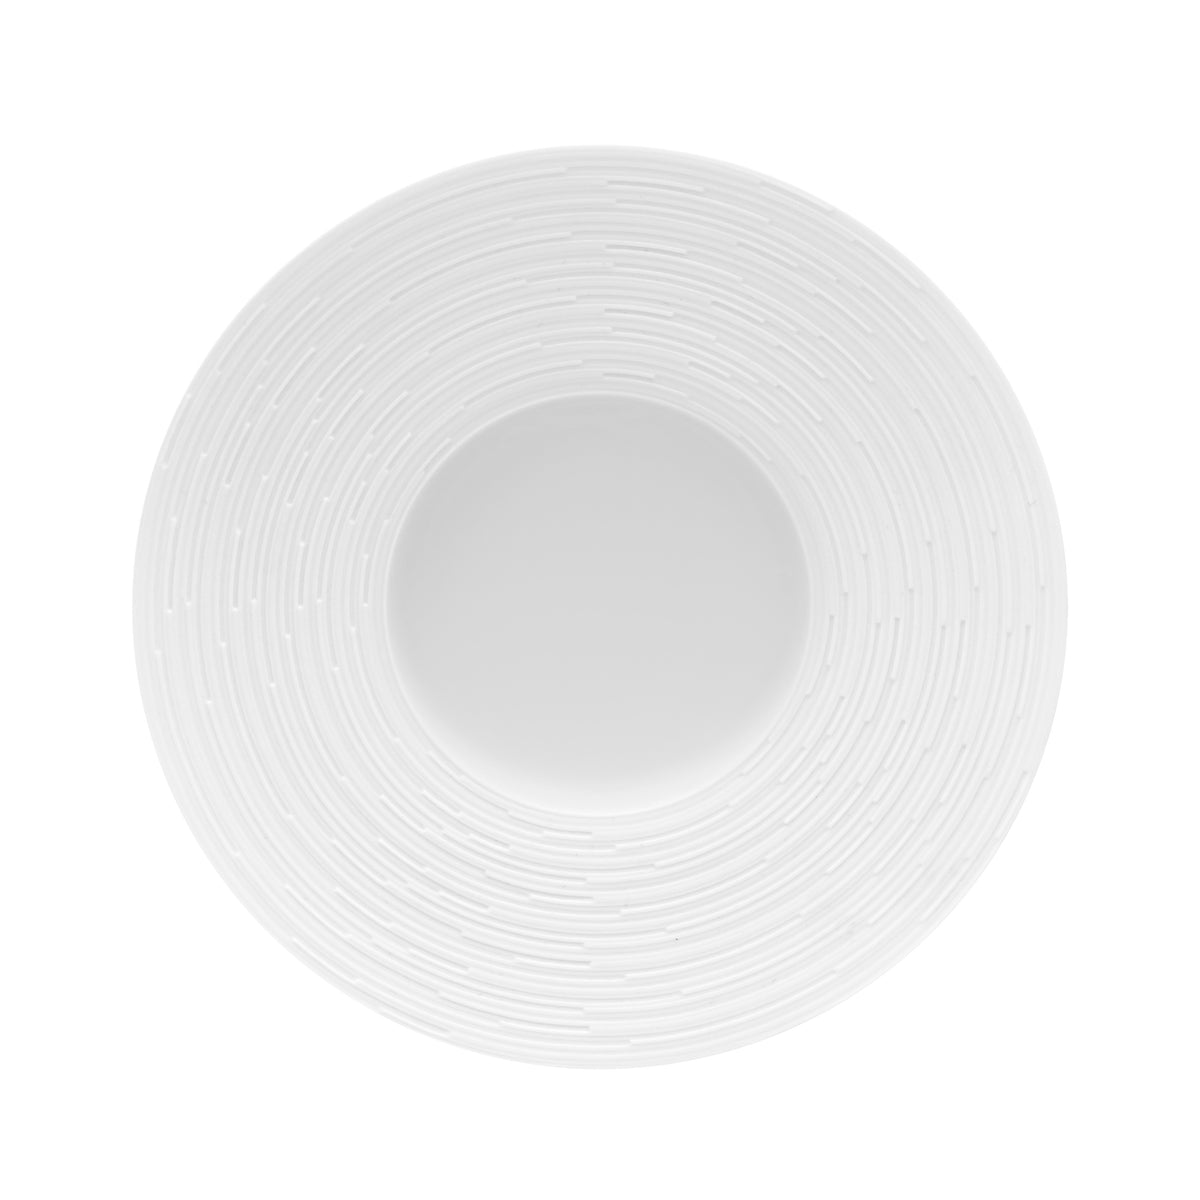 LABYRINTHE - Rim soup plate, large